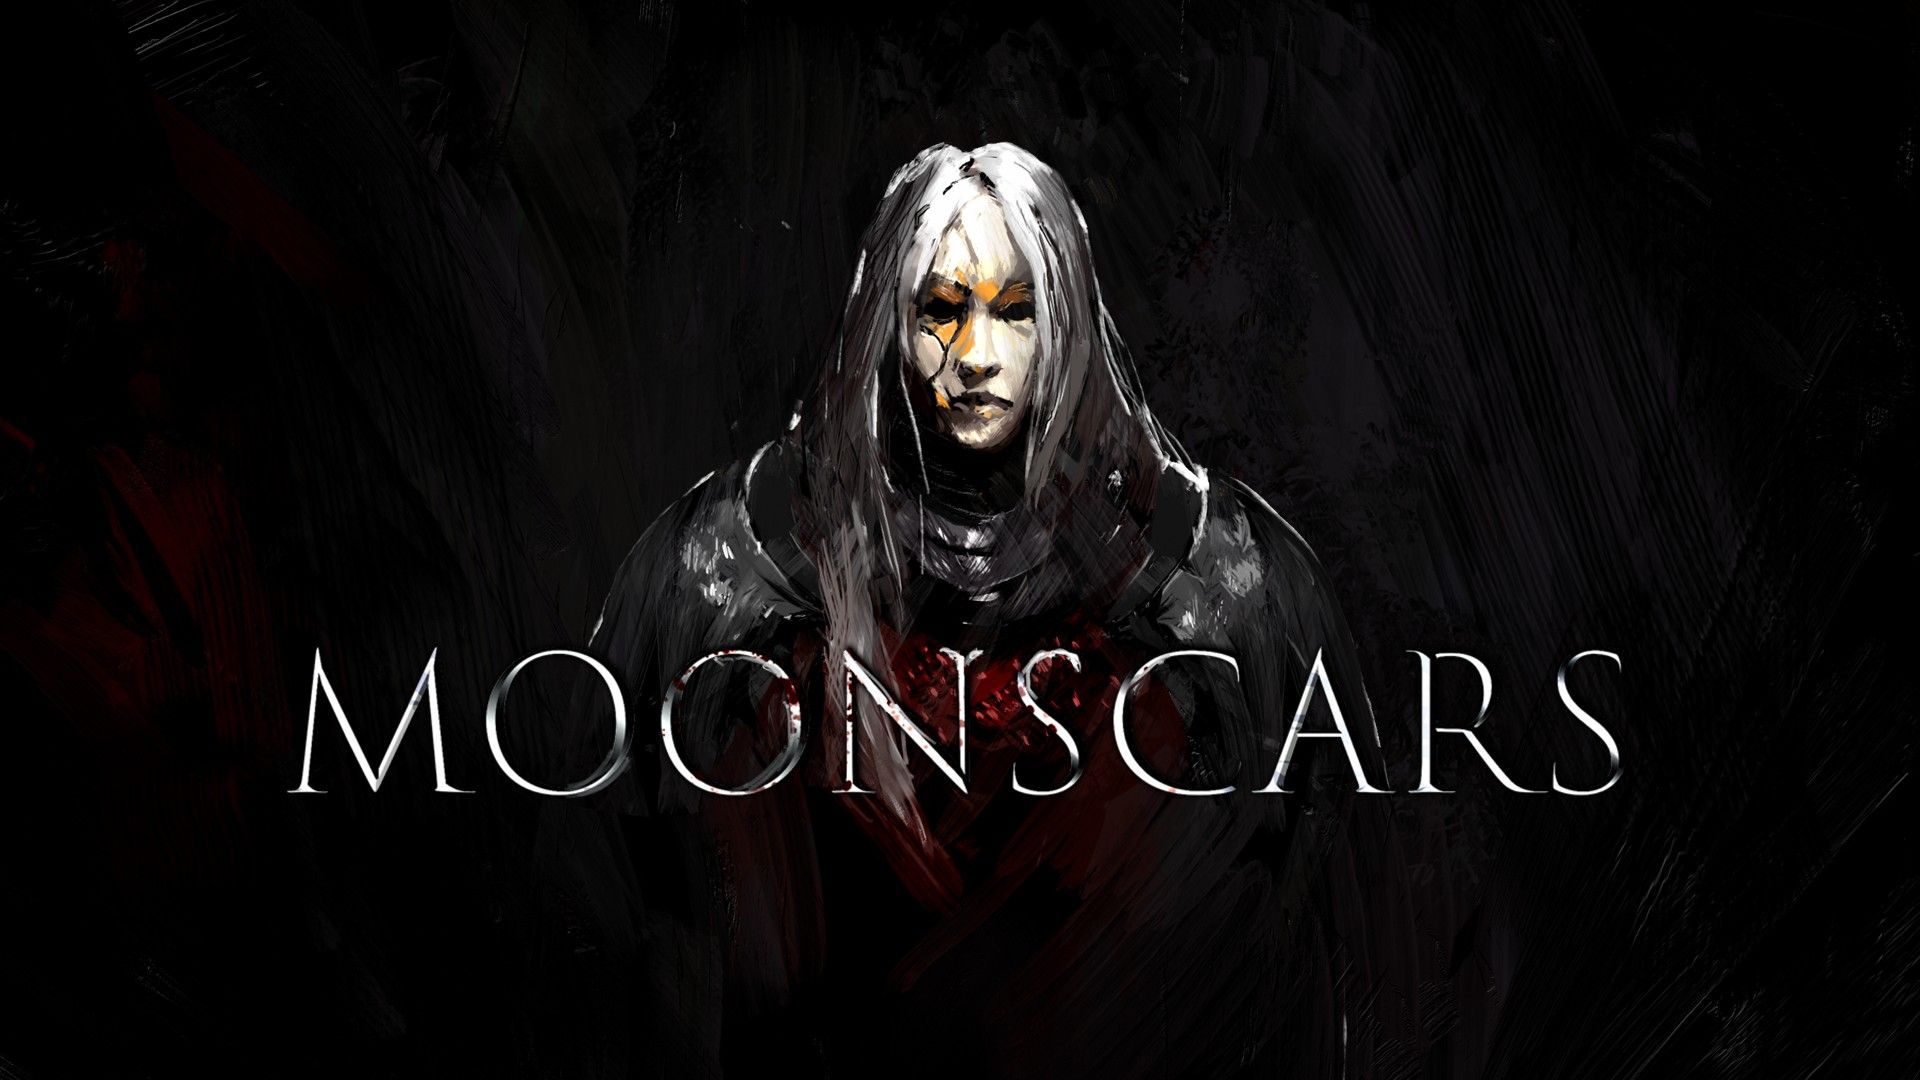 Moonscars cover art.